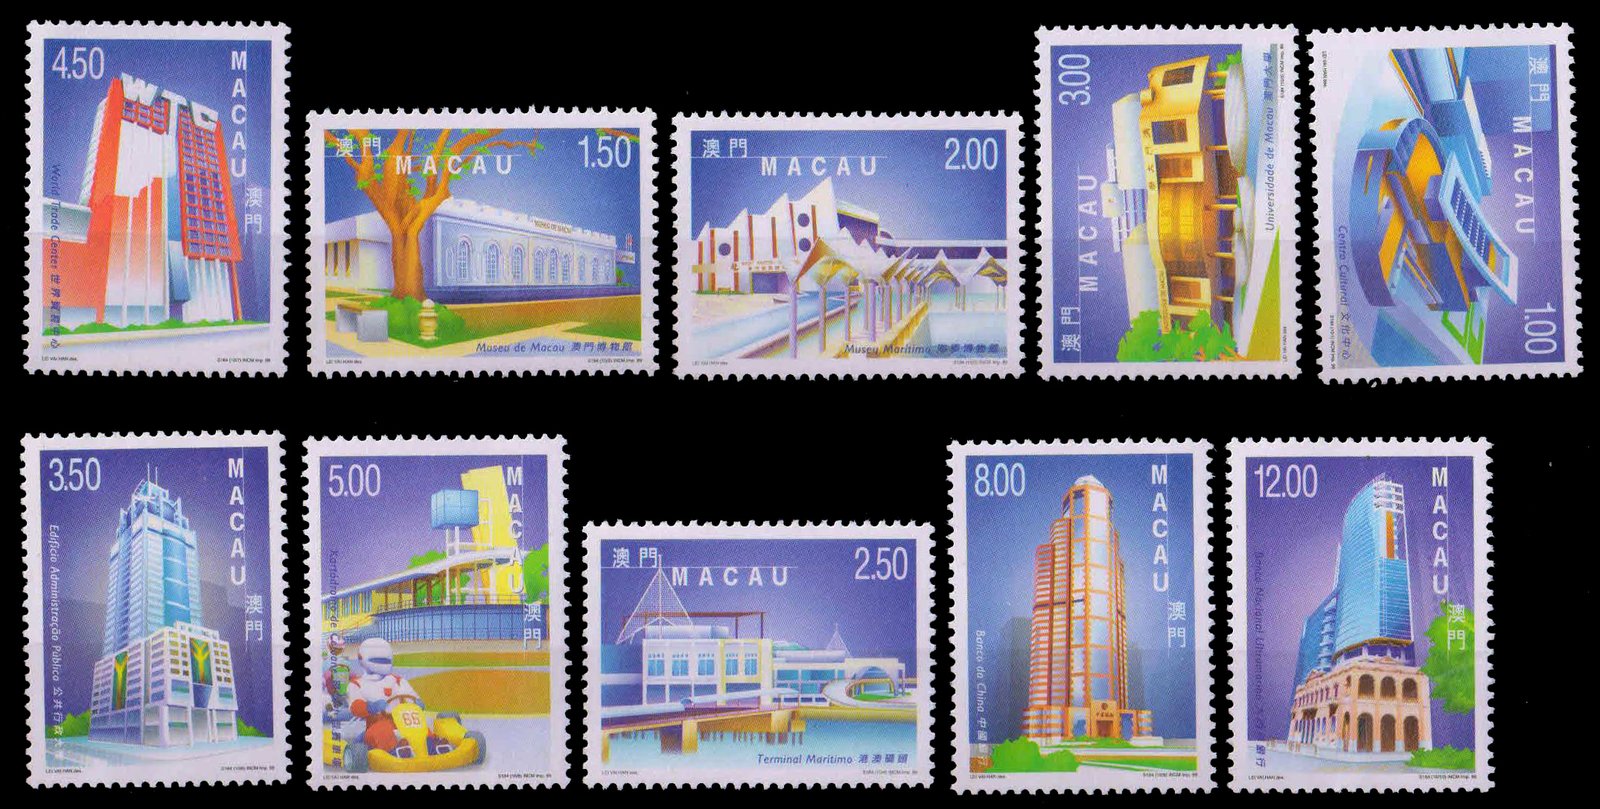 MACAU 1999-Modern Buildings, Museum, Ferry Terminal, University, Bank of China, Set of 10, MNH, S.G. 1107-1116-Cat £ 25-